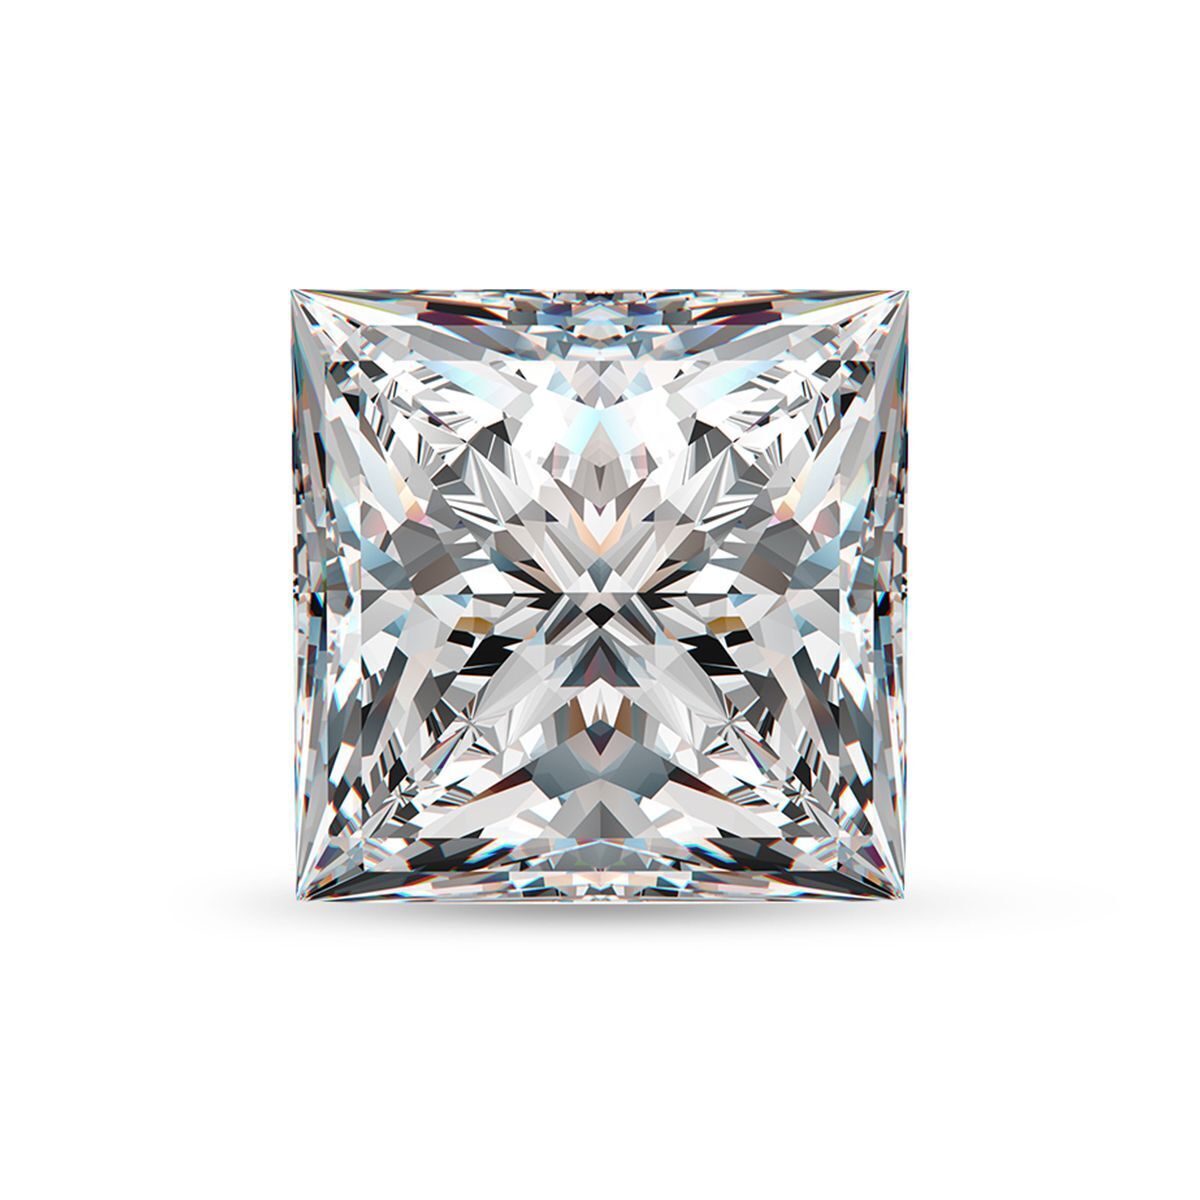 Square Cut Loose Gem Stones Diamond Simulation Crystals Gemstone Crystals 1pc